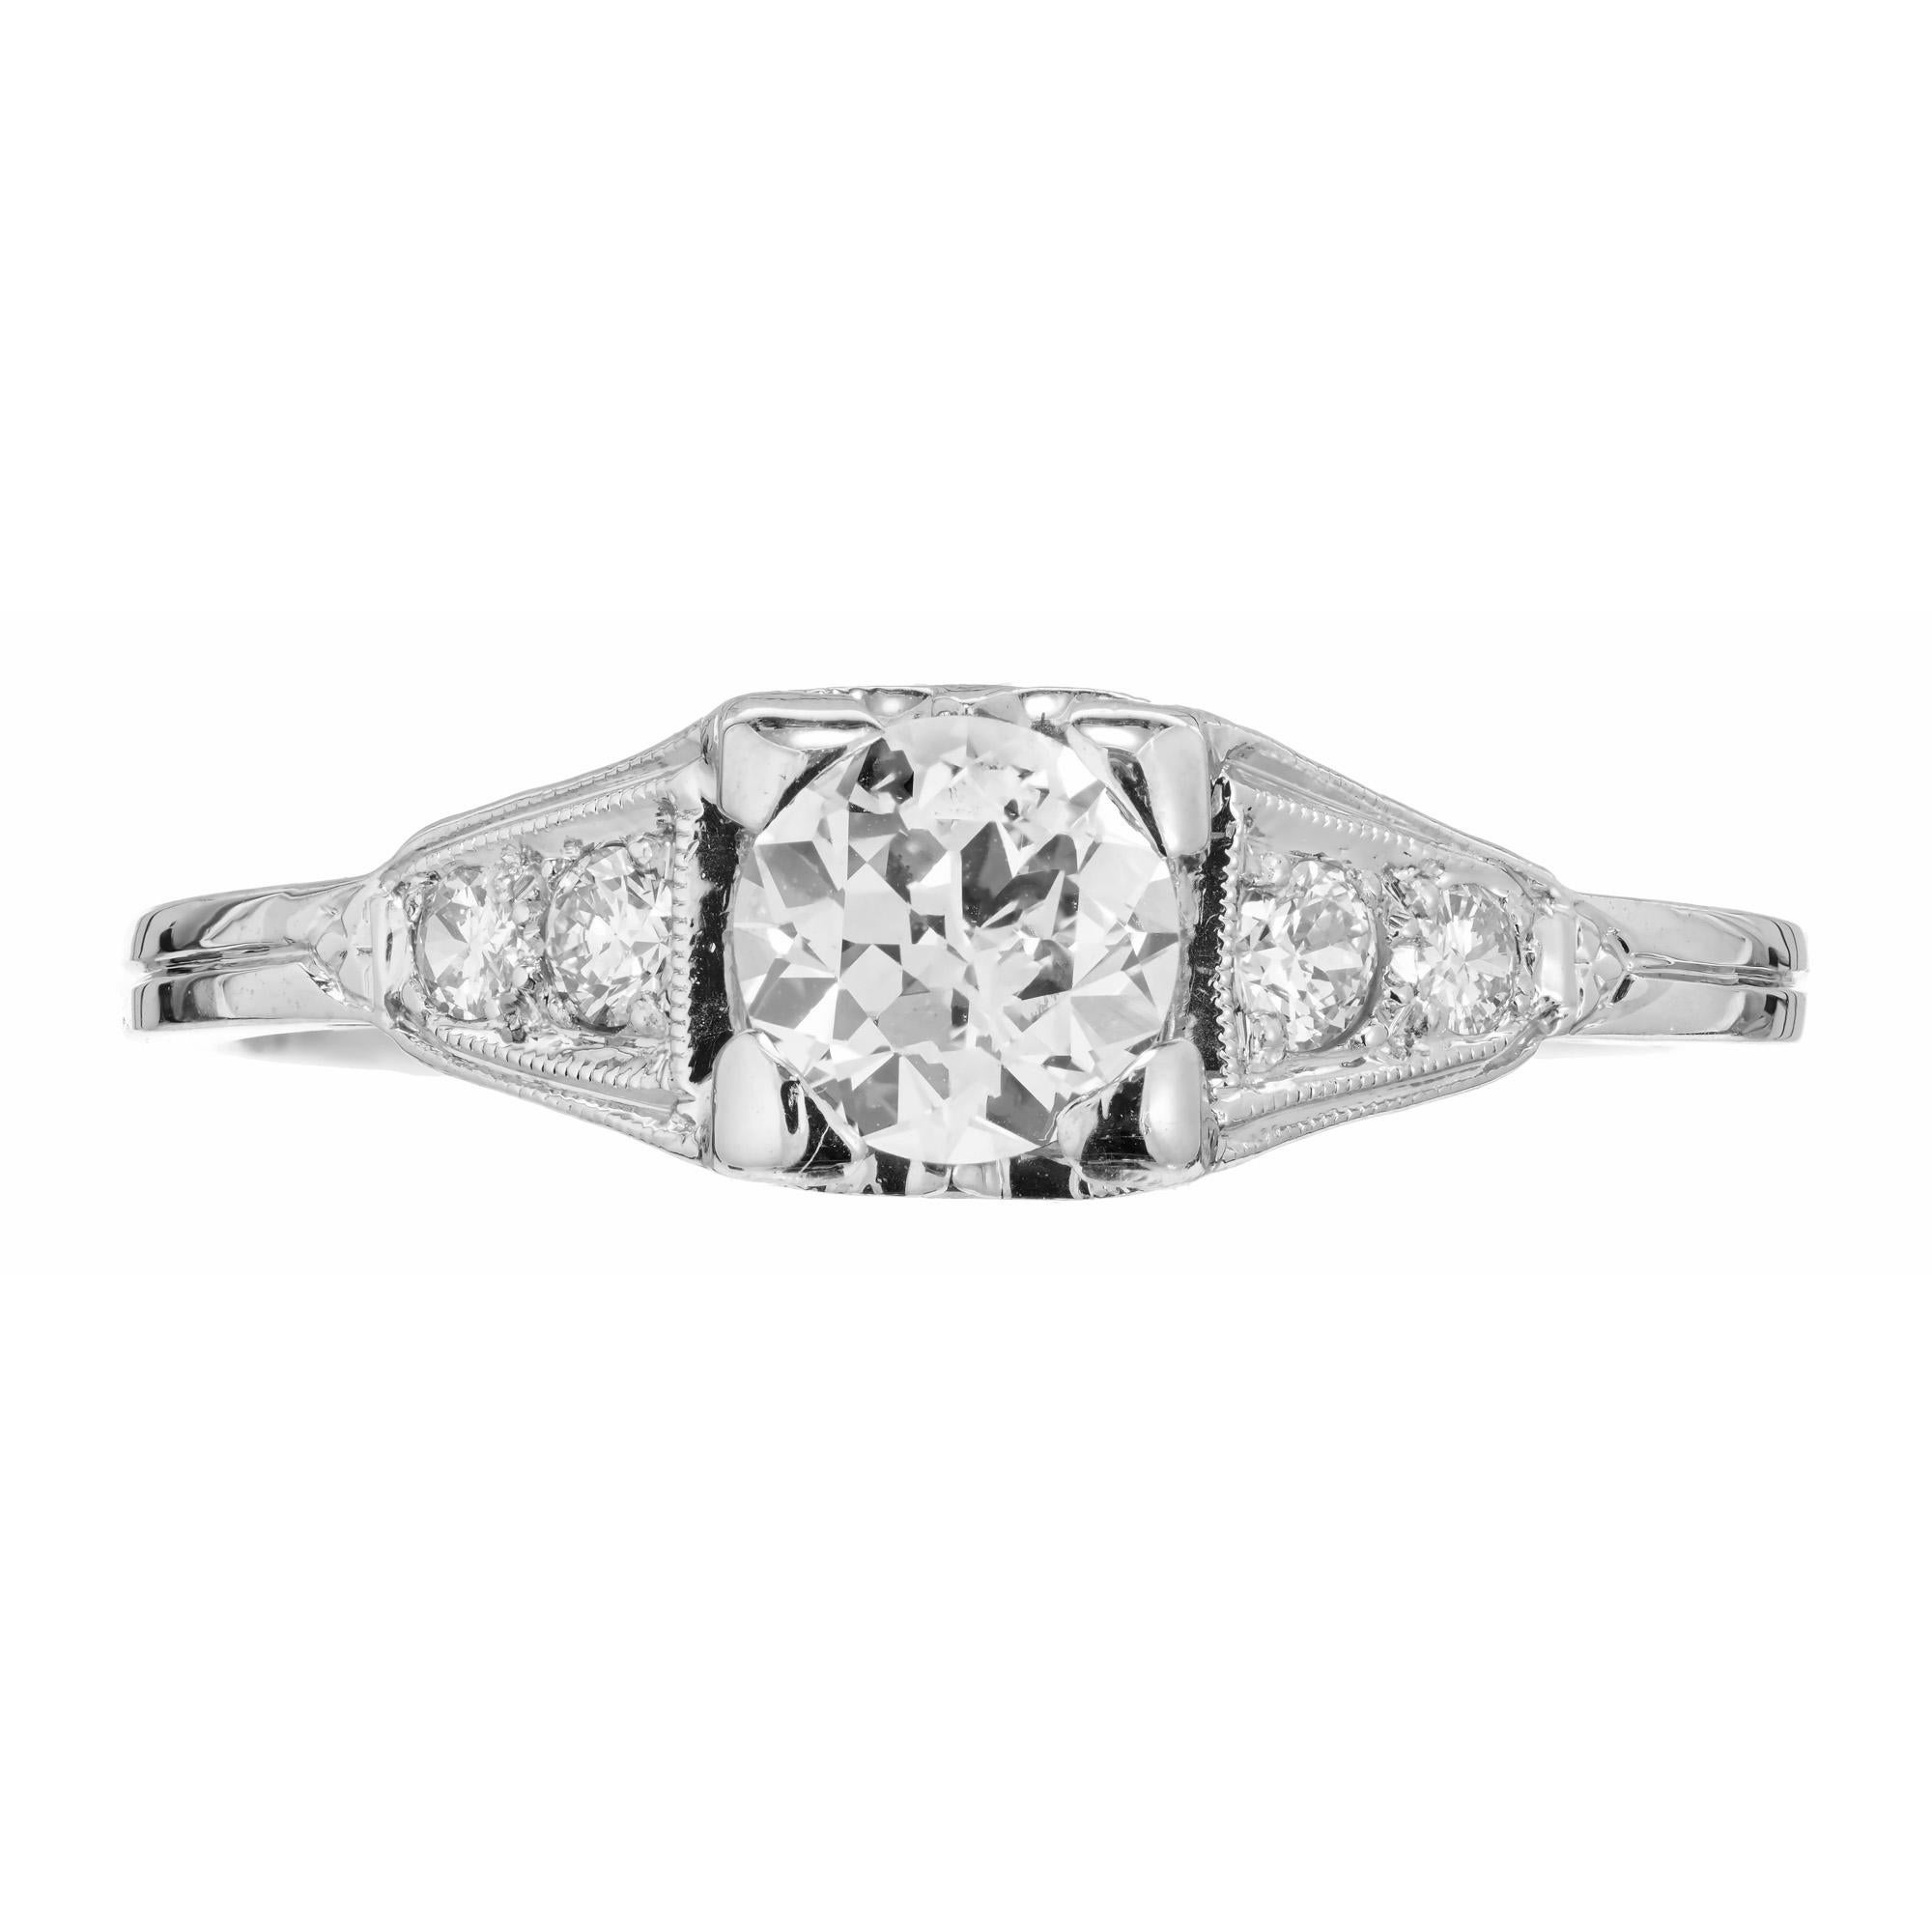 Original wonderful 1930's Tiffany & Co. diamond engagement ring. EGL certified .44 carat transitional cut center diamond, set in a platinum filigree and pierced setting with 4 round cut accent diamonds. Beautiful representation of the Art Deco era.